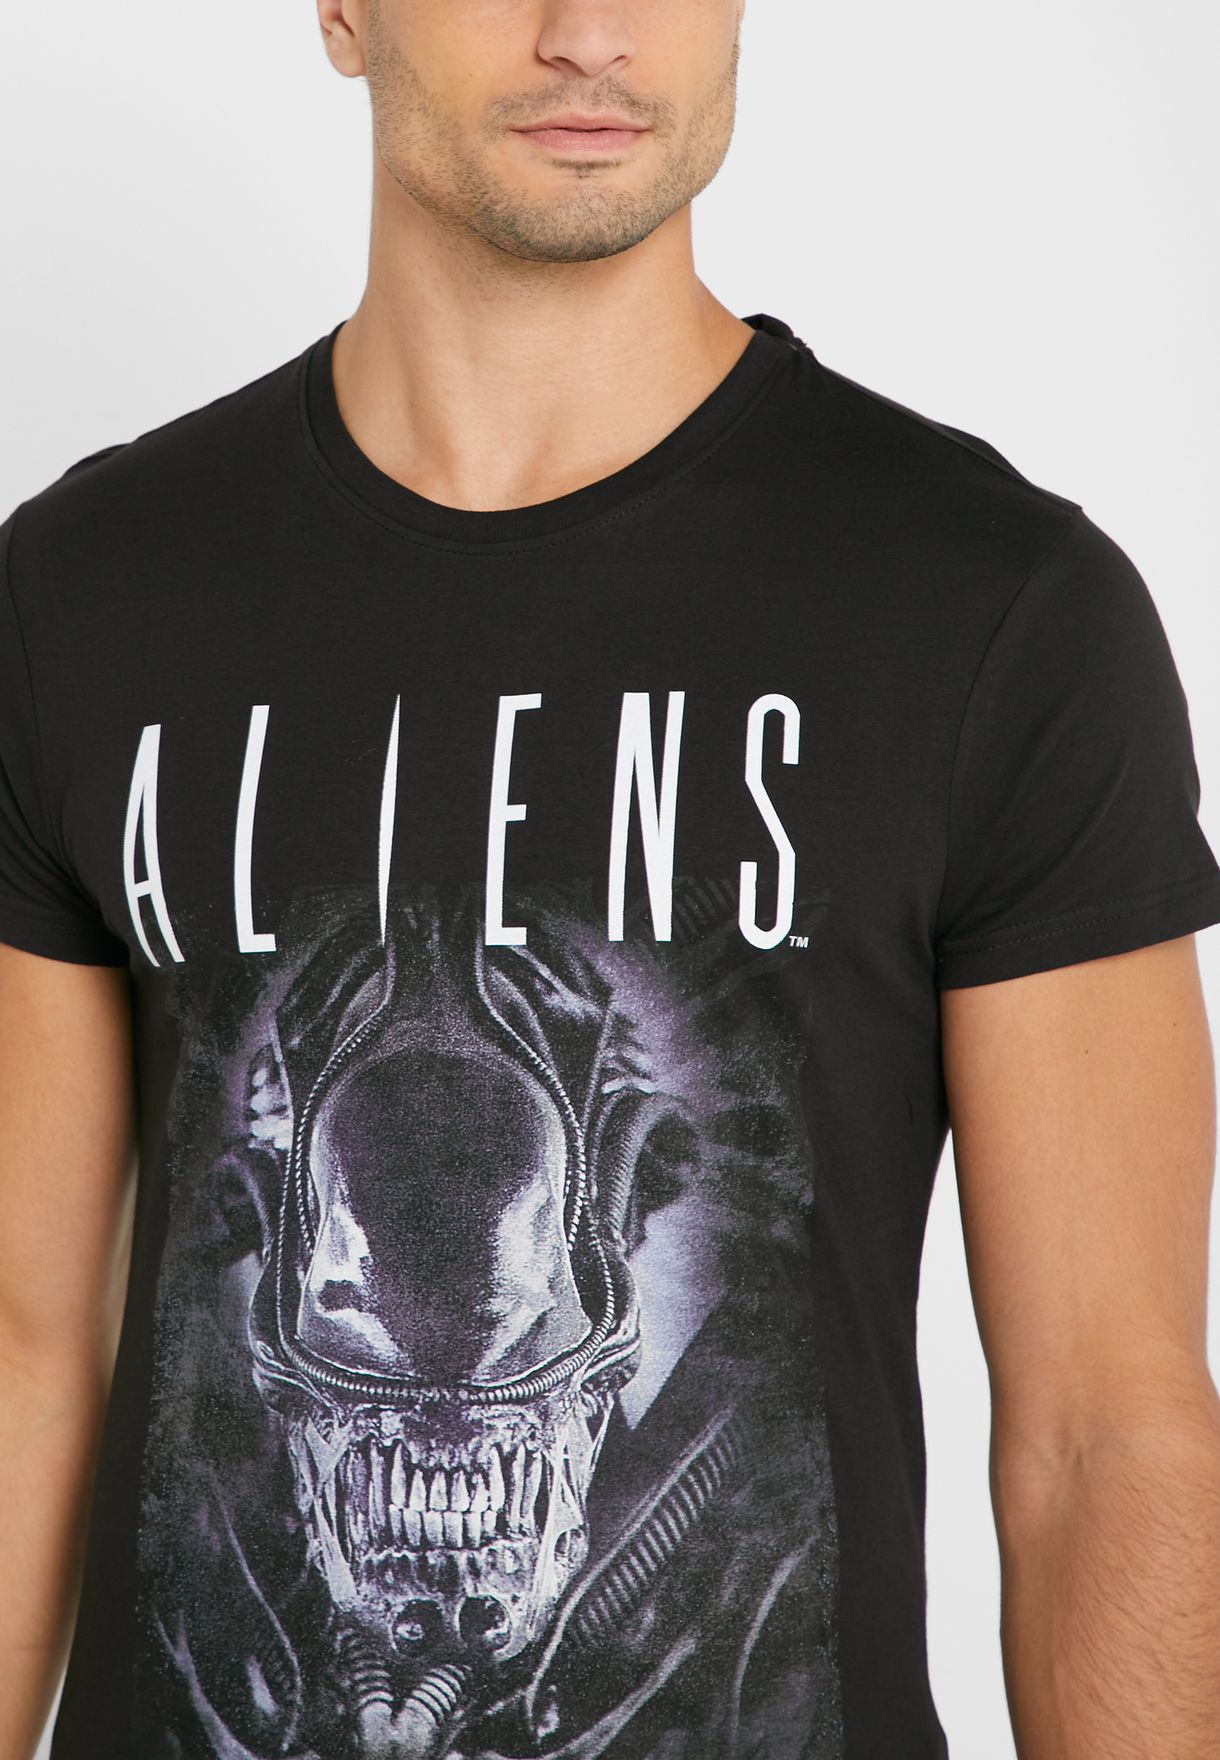 Aliens Crew Neck T-Shirt